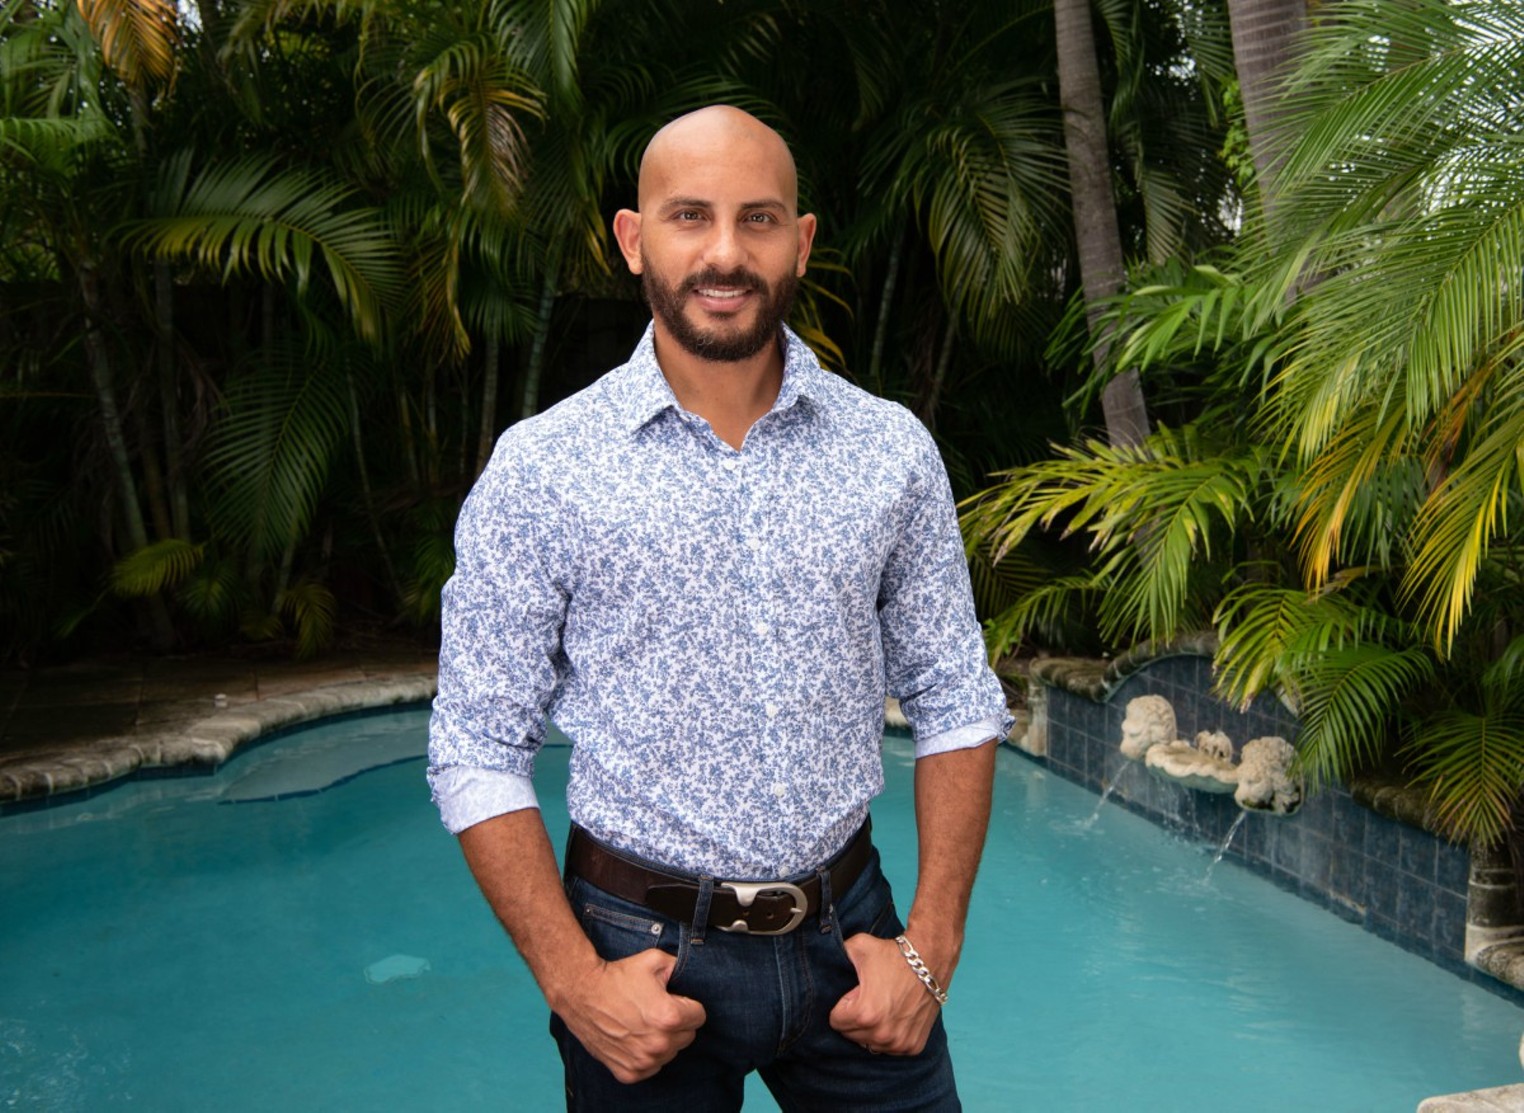 Porn Star Juan Melecio Runs for Wilton Manors City Commission Miami New Times pic